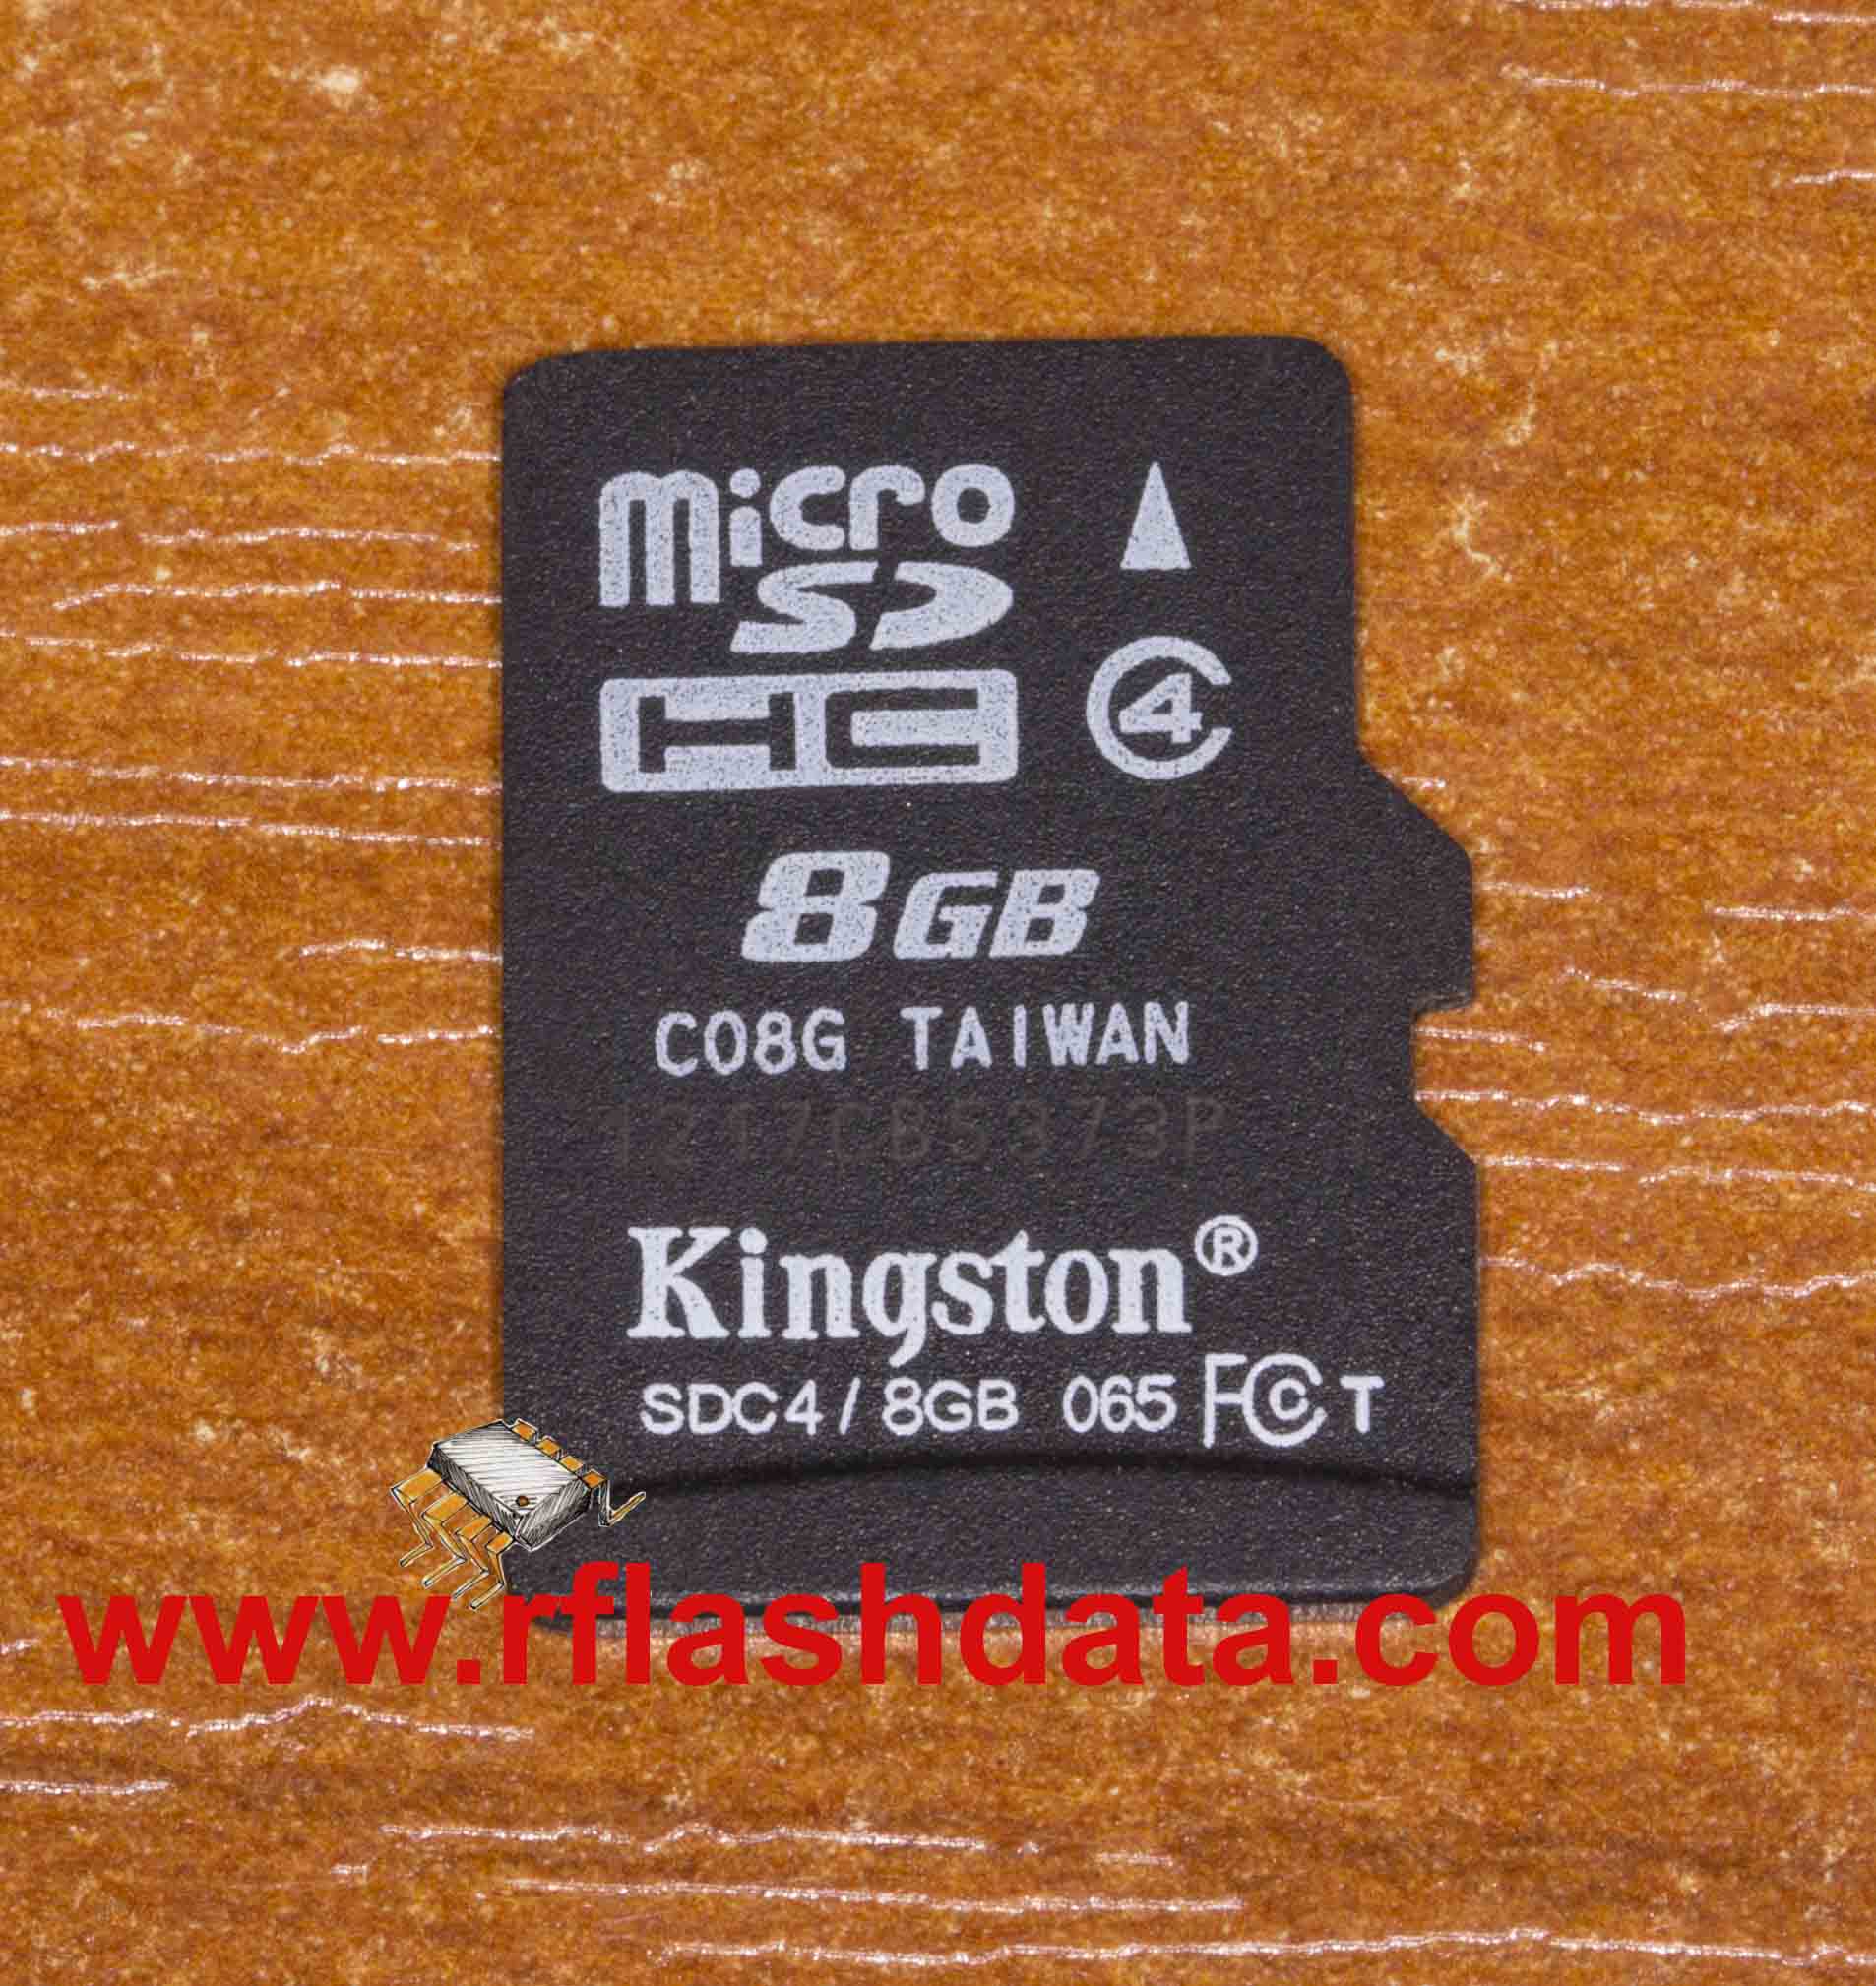 Kingston microSD